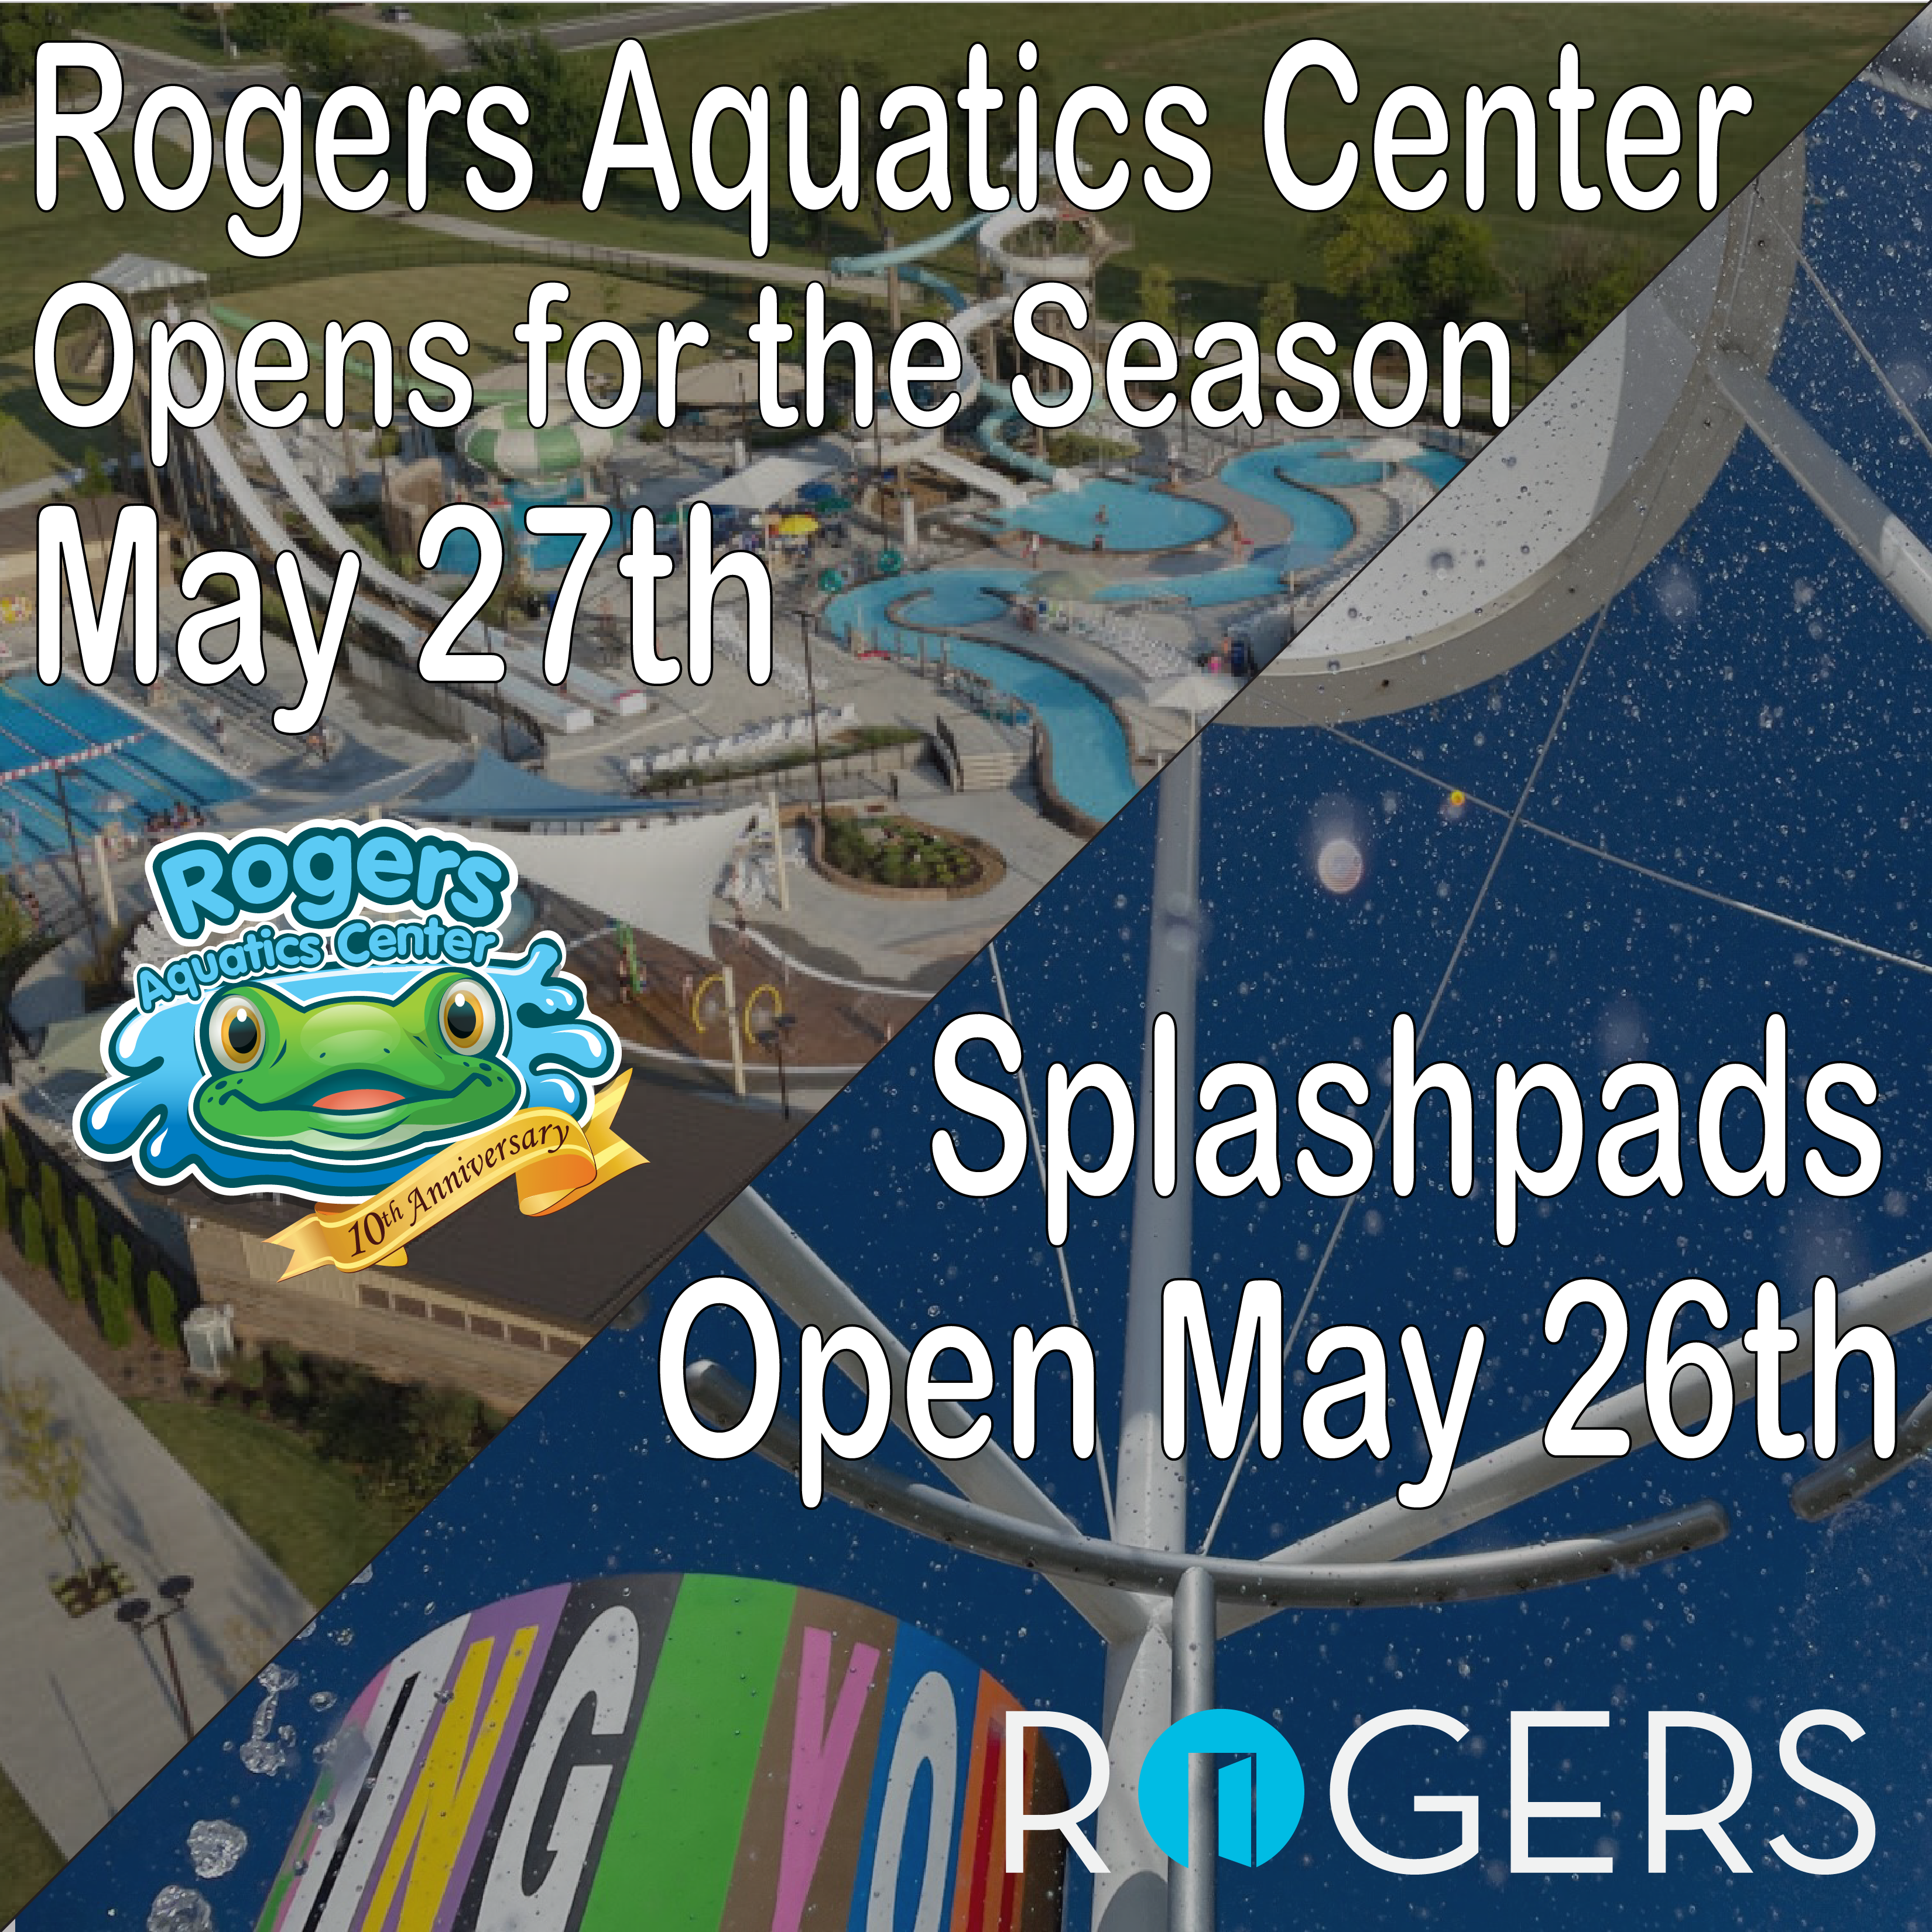 Rogers Aquatics Center opens May 27 - Splashpads open May 26